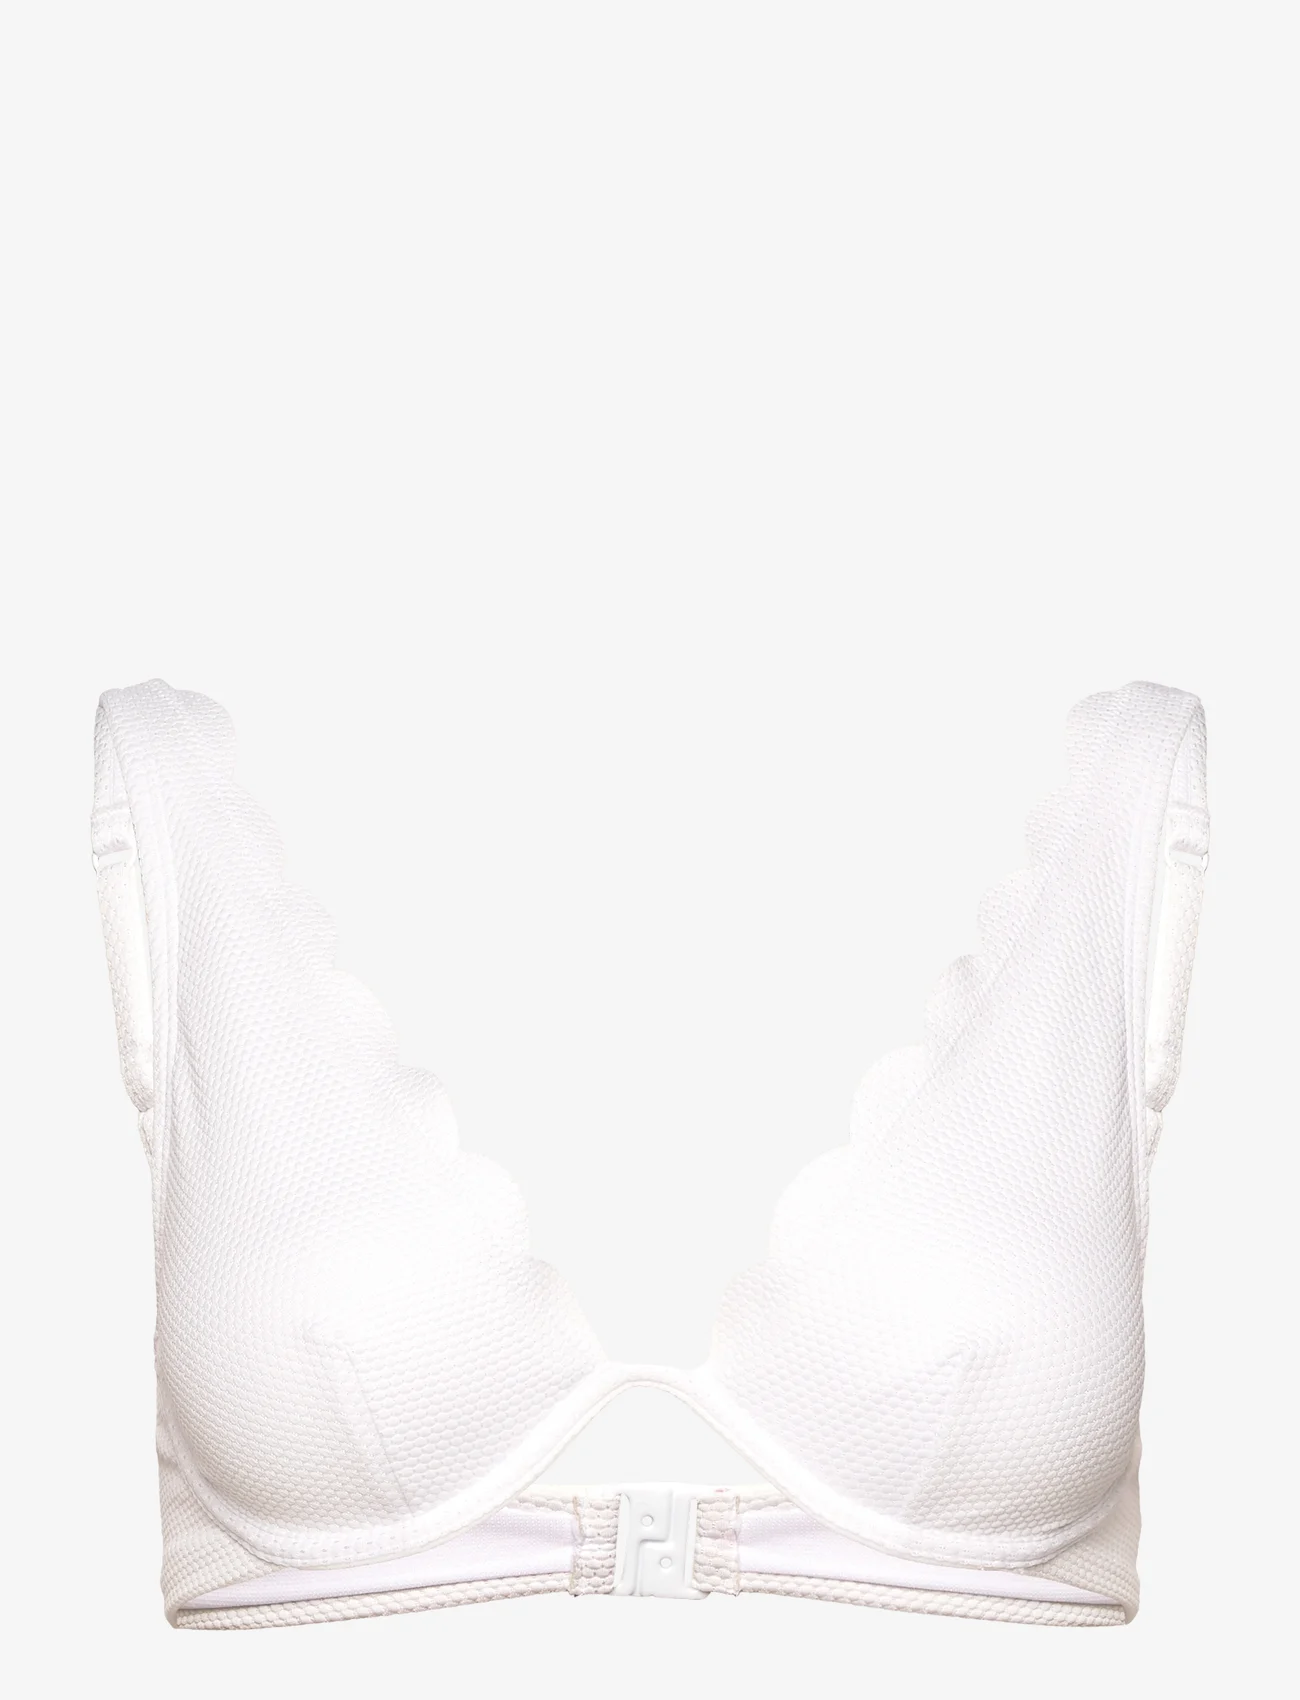 Hunkemöller - Scallop CW up - bikinis med trekantform - white - 0